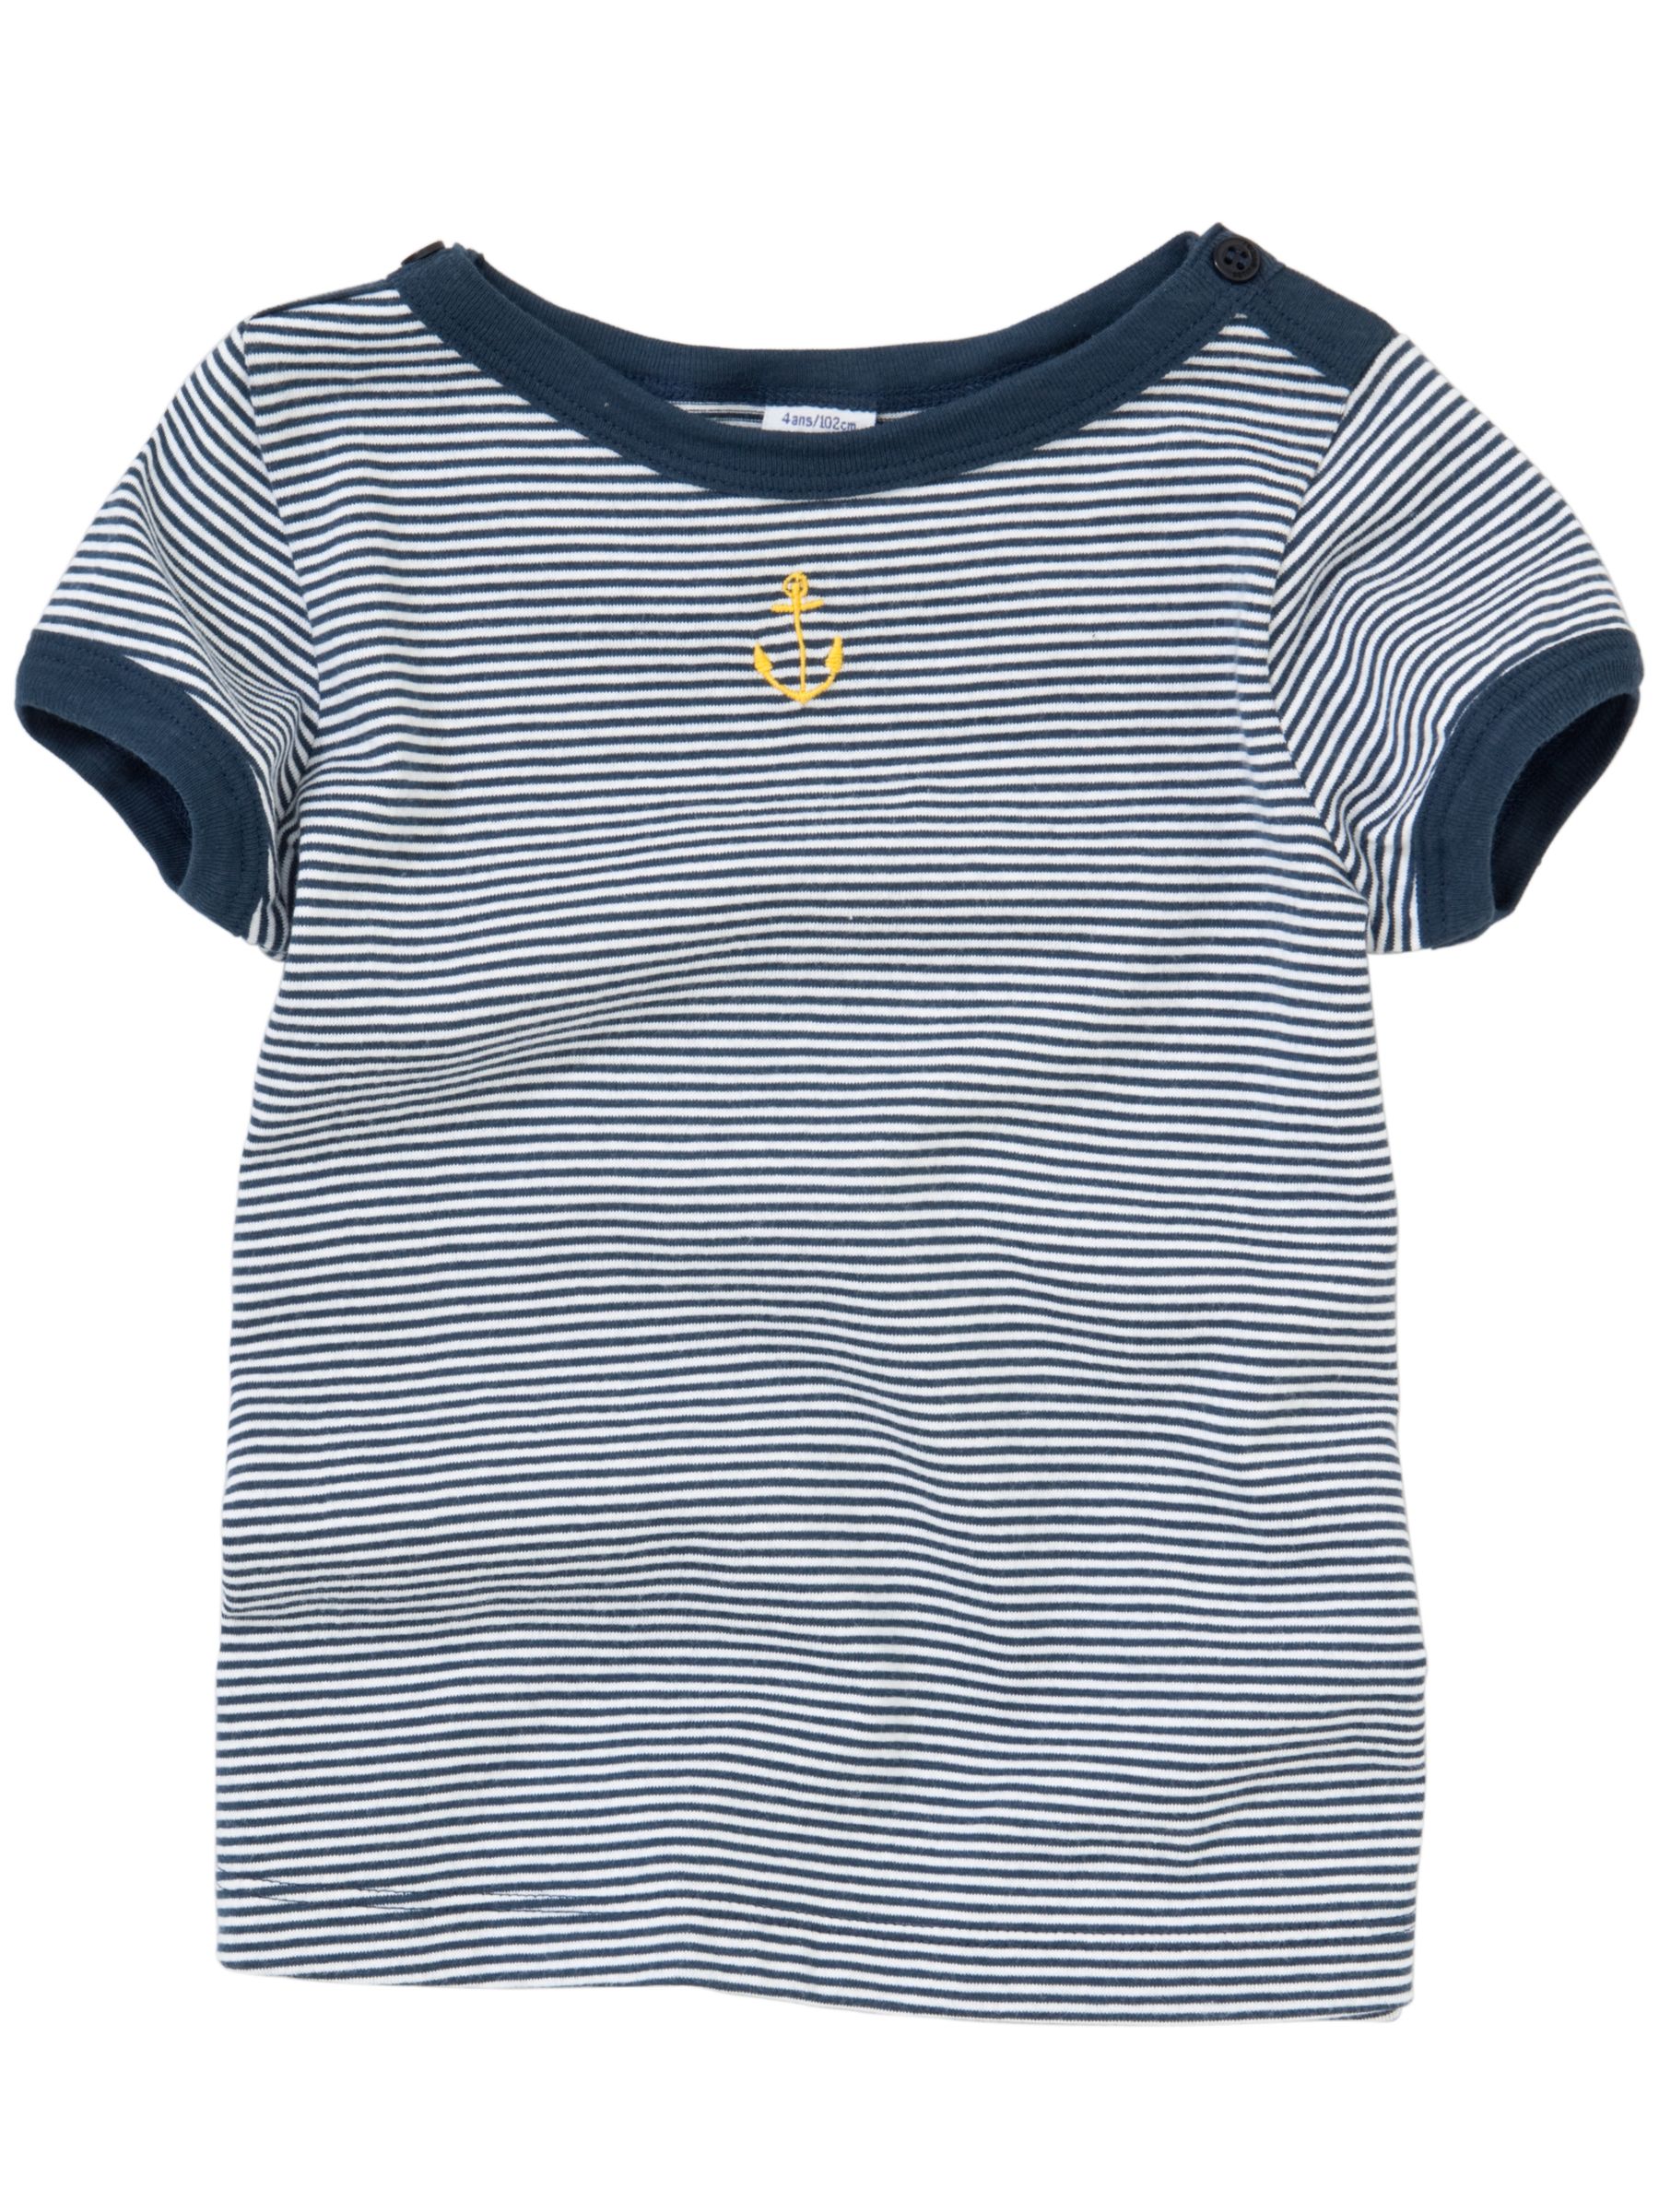 Petit Bateau Stripe T-Shirt, Navy/cream